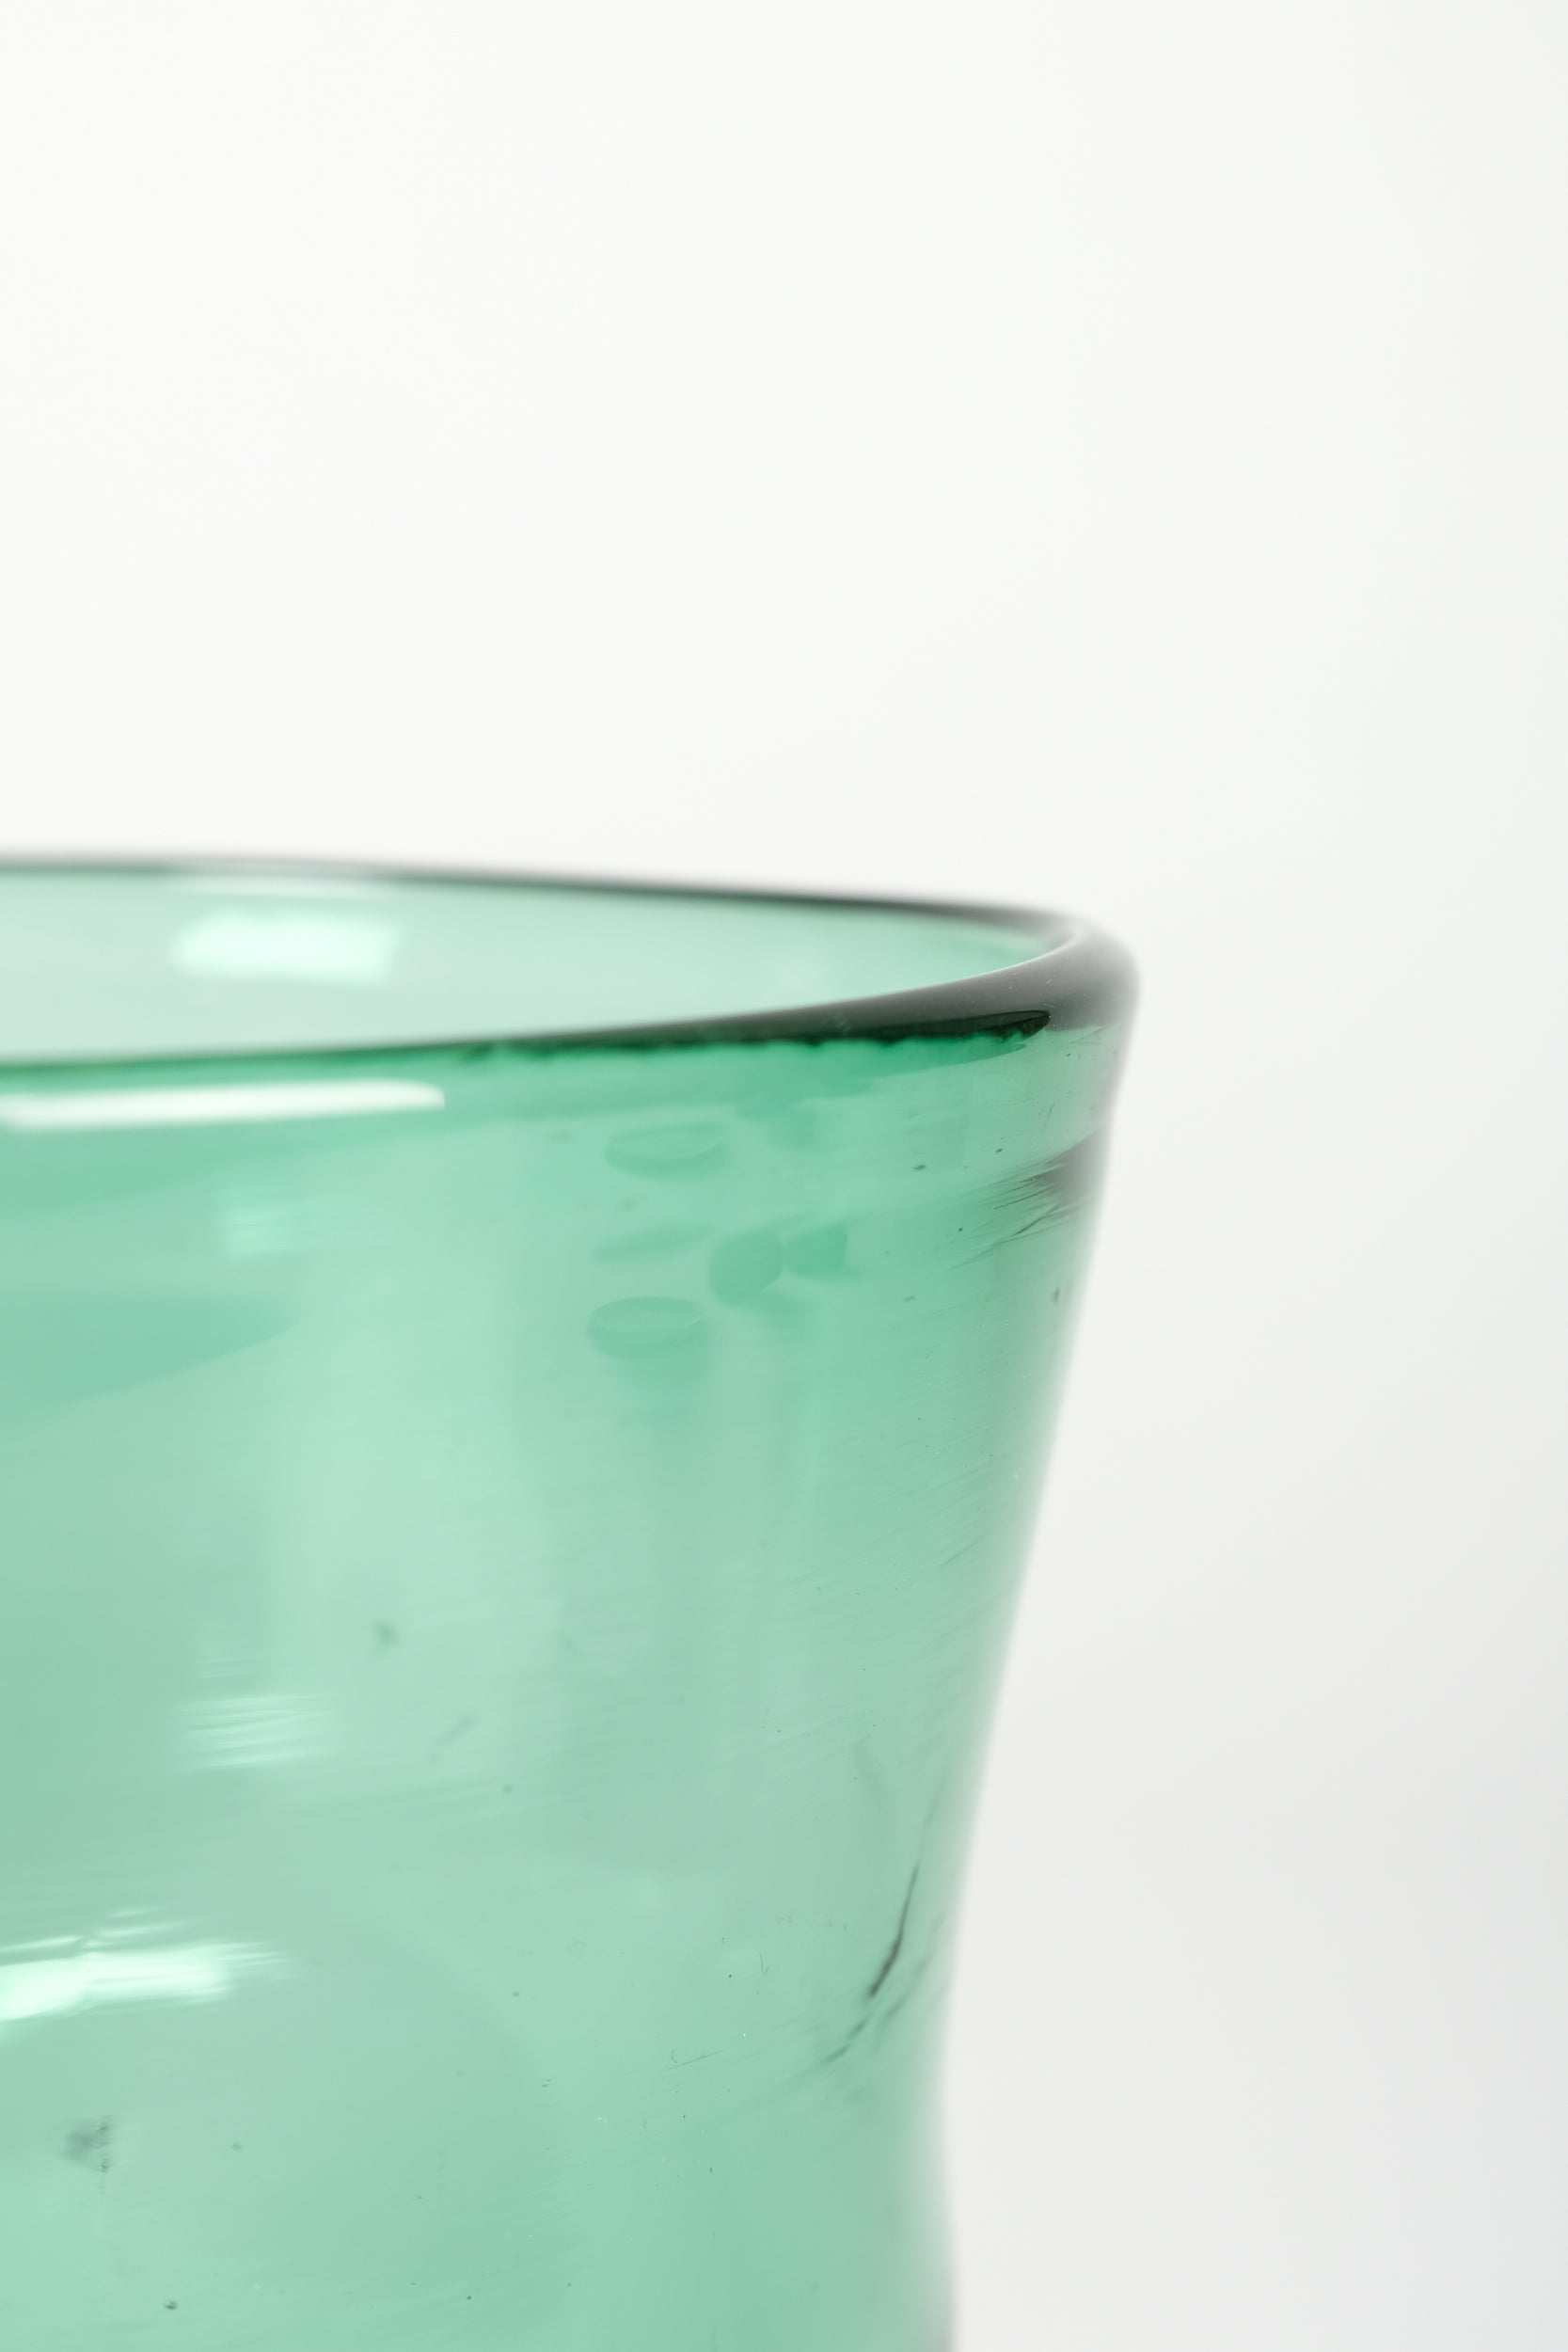 Organische Empoli-Glas Vase, Italien, 60er